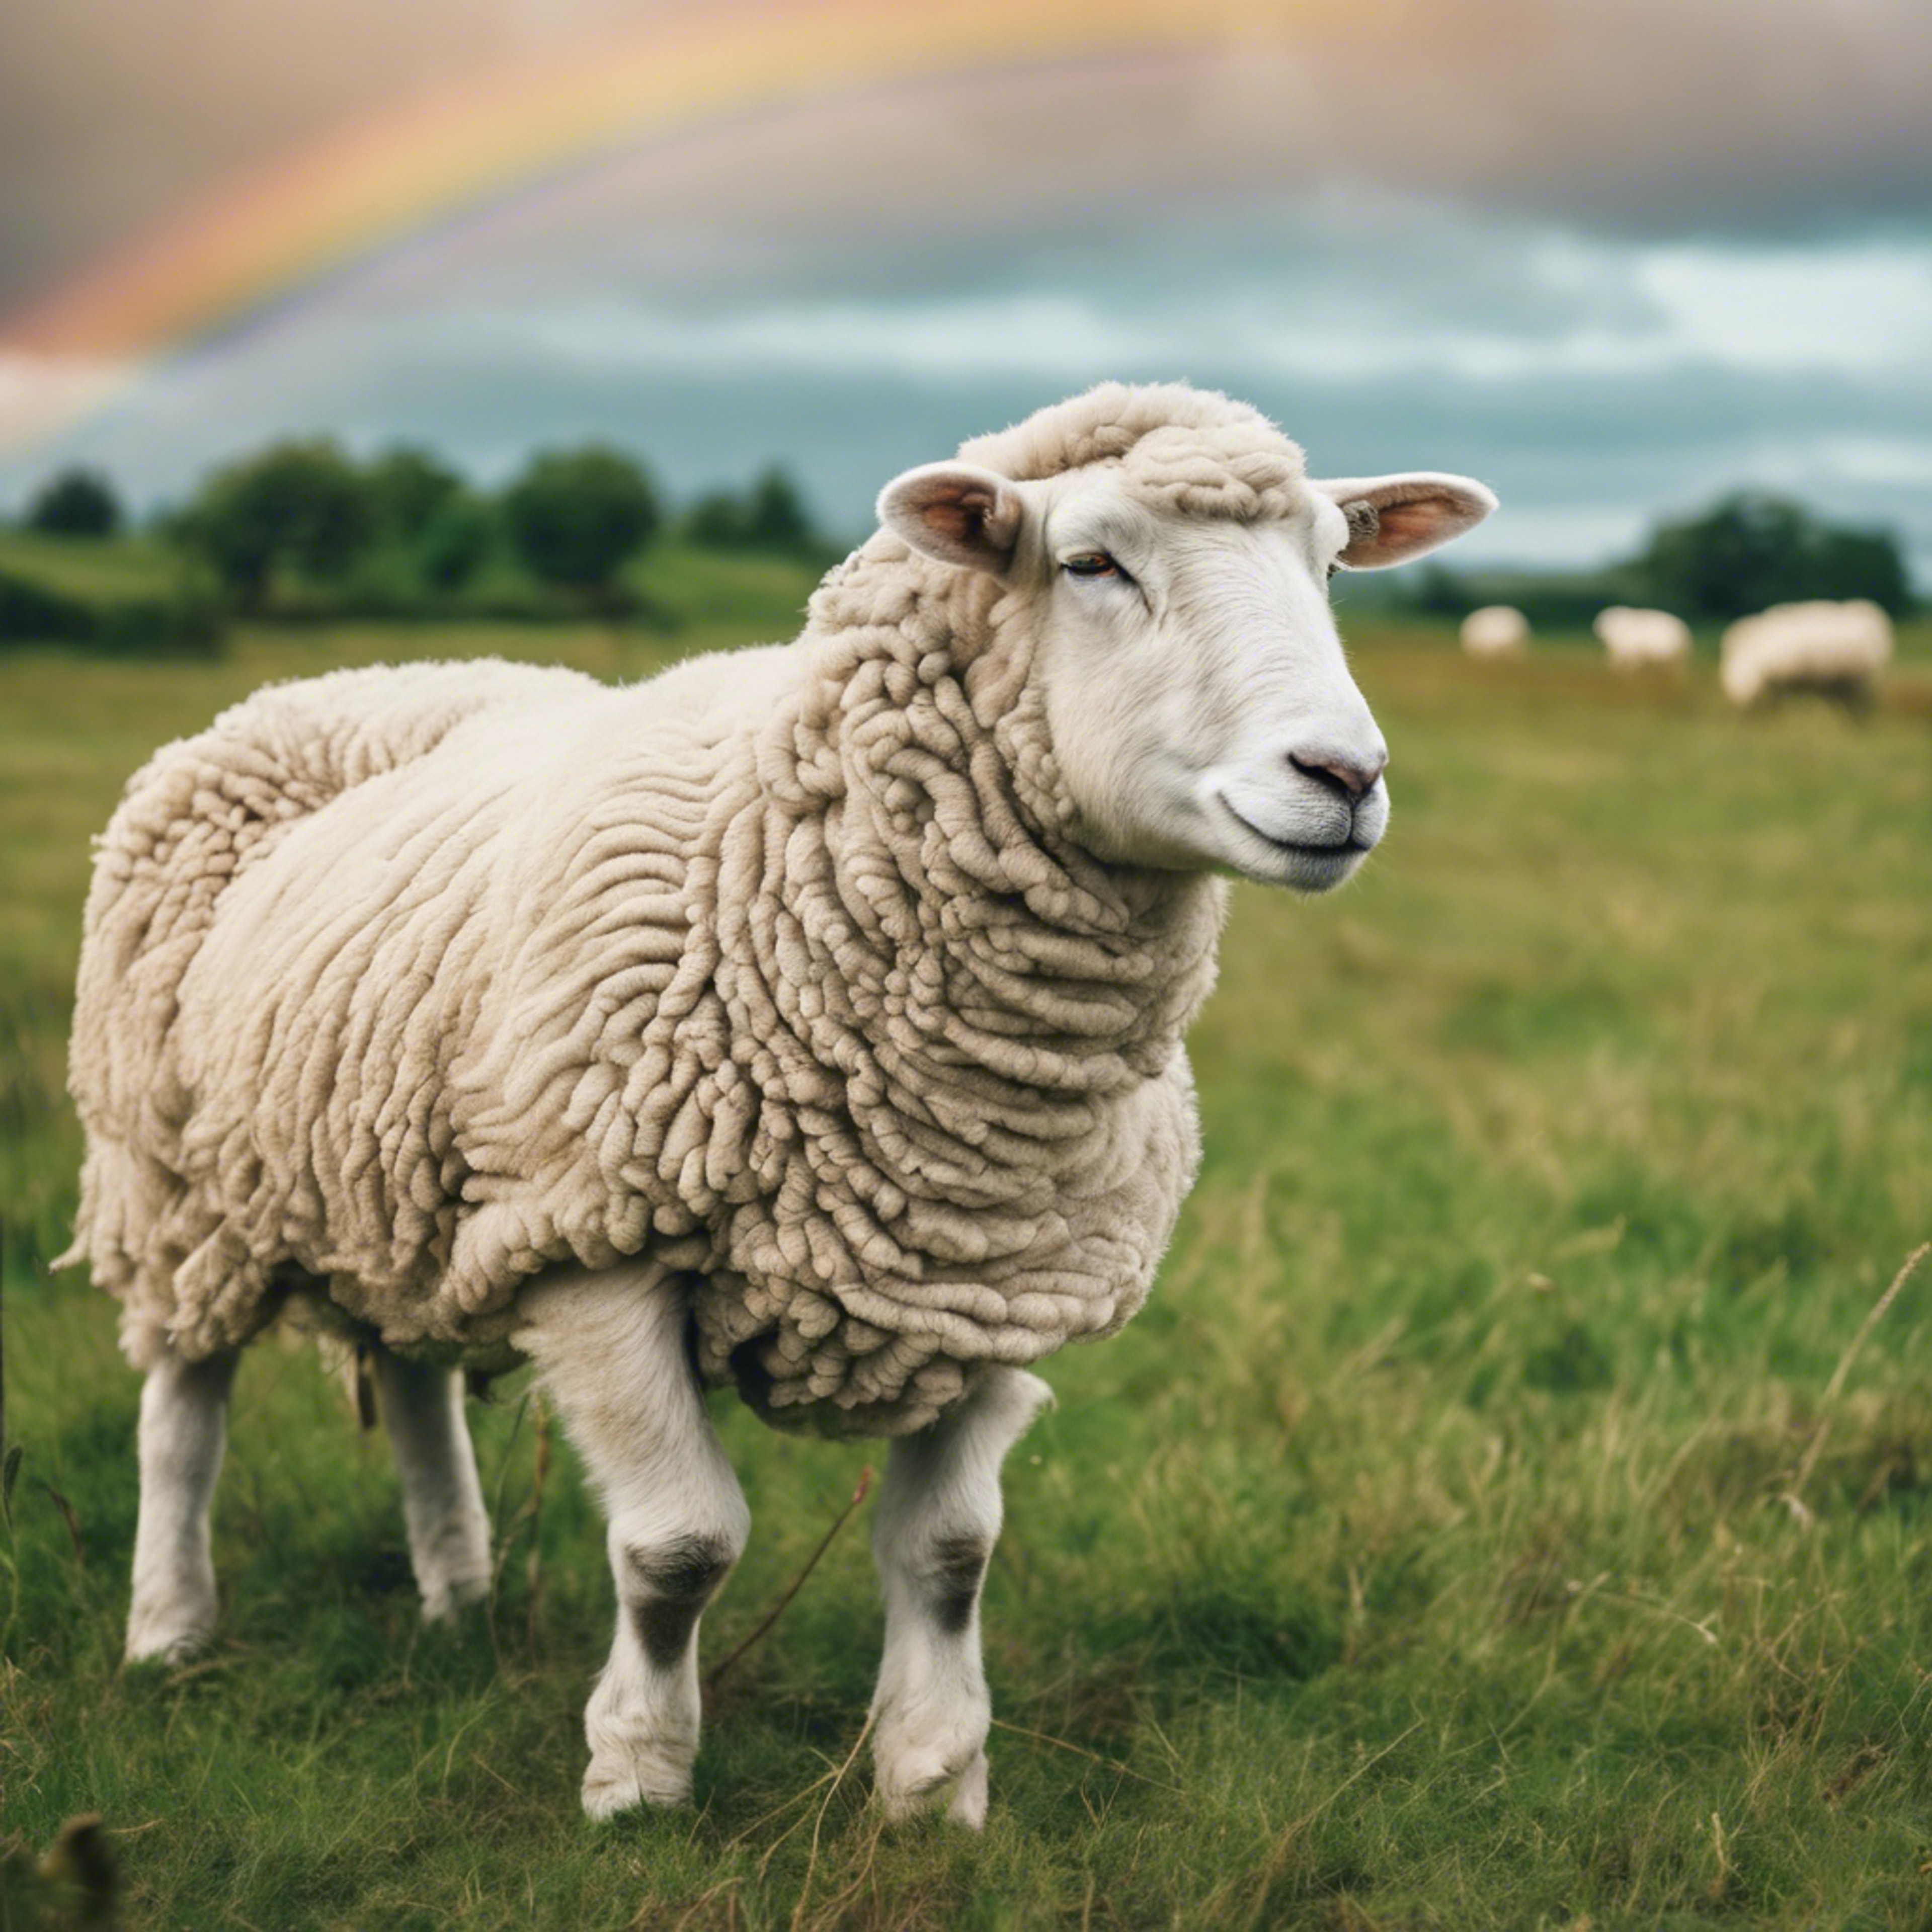 A beautiful open field of grass with puffy white cloud sheep that create rainbow trails as they bound joyfully around. duvar kağıdı[bc005b864b354d3896db]